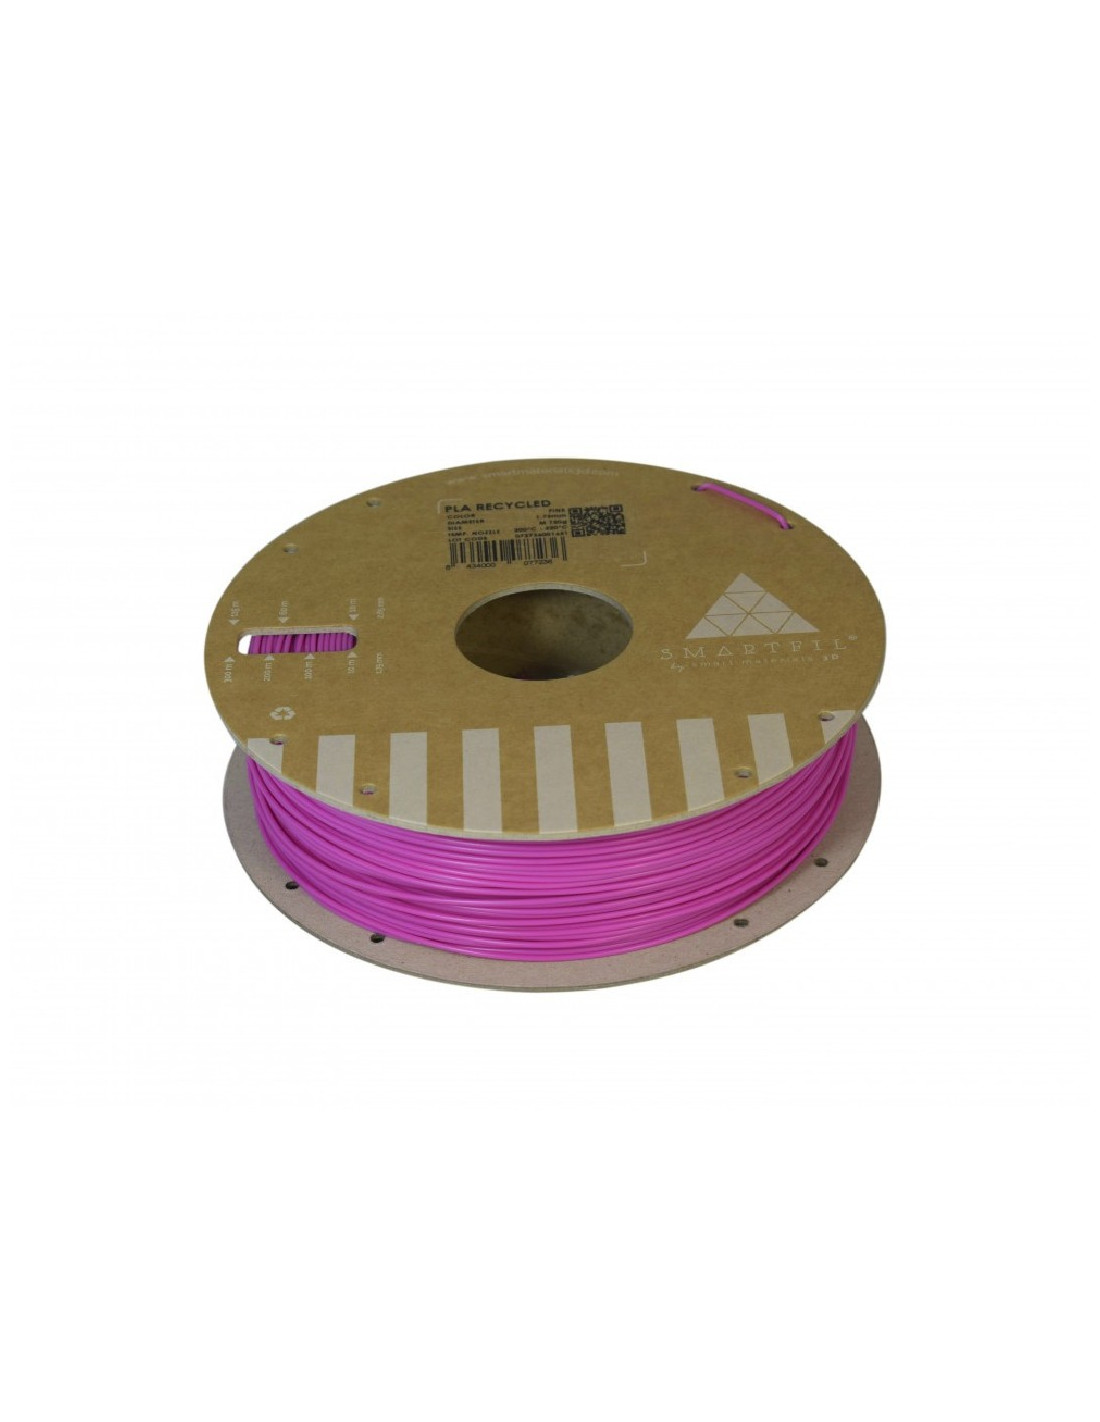 Filamento PLA Reciclado de Smartfil 1,75 mm (0,75Kg) - Pink